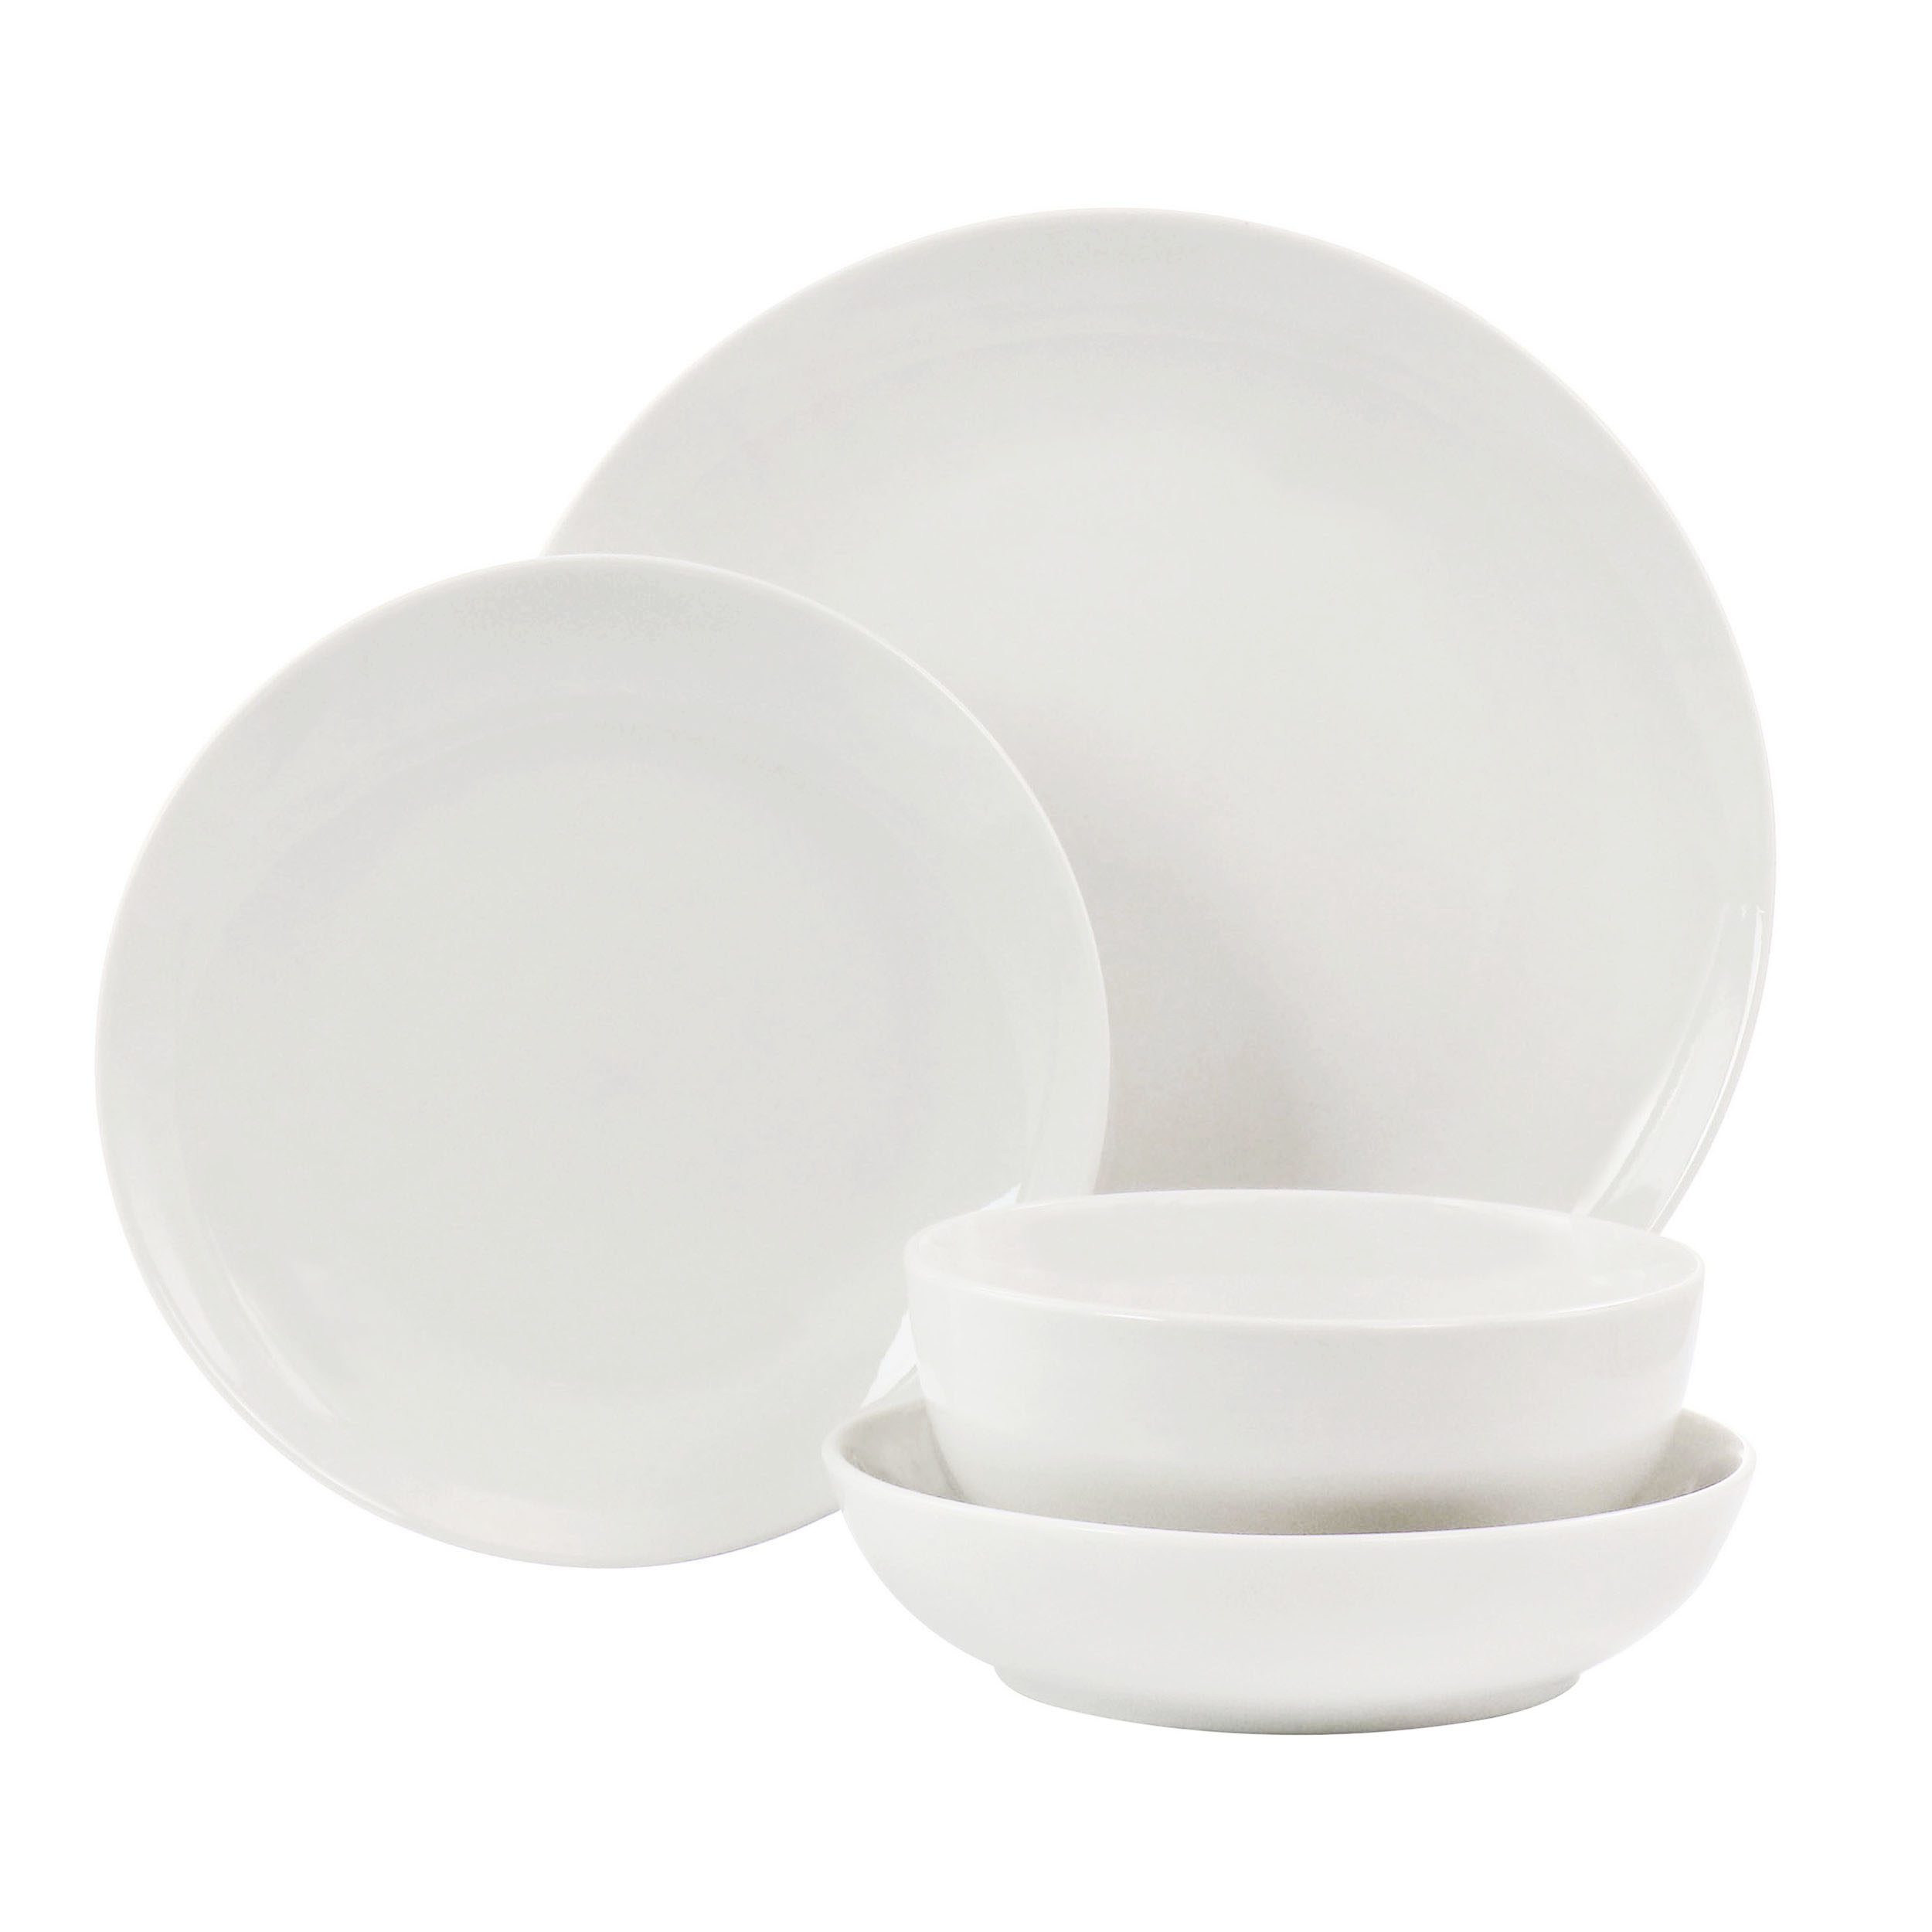 Elama Camellia 16 Piece Porcelain Double Bowl Dinnerware Set